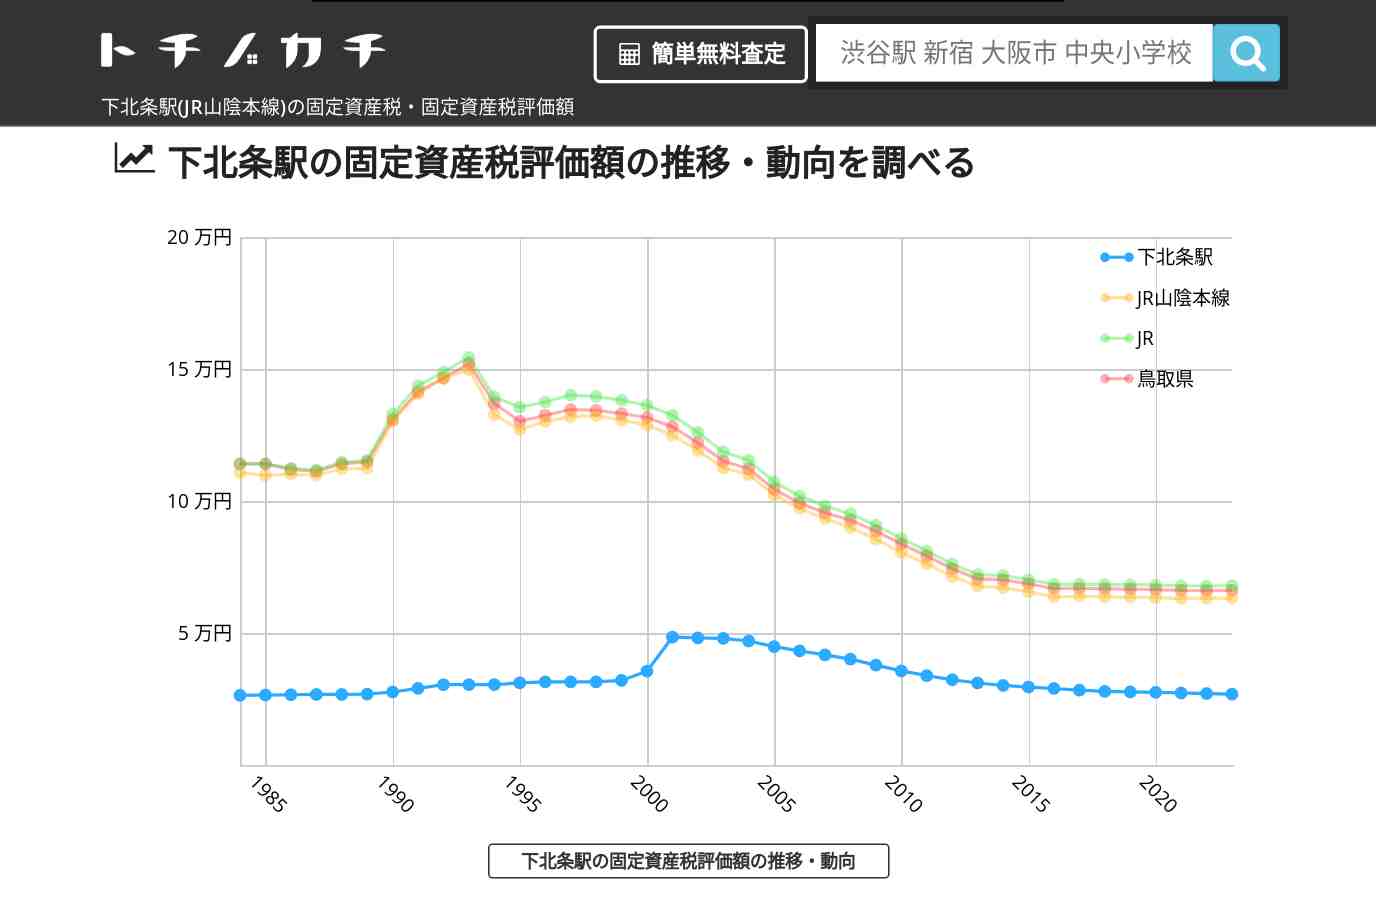 下北条駅(JR山陰本線)の固定資産税・固定資産税評価額 | トチノカチ